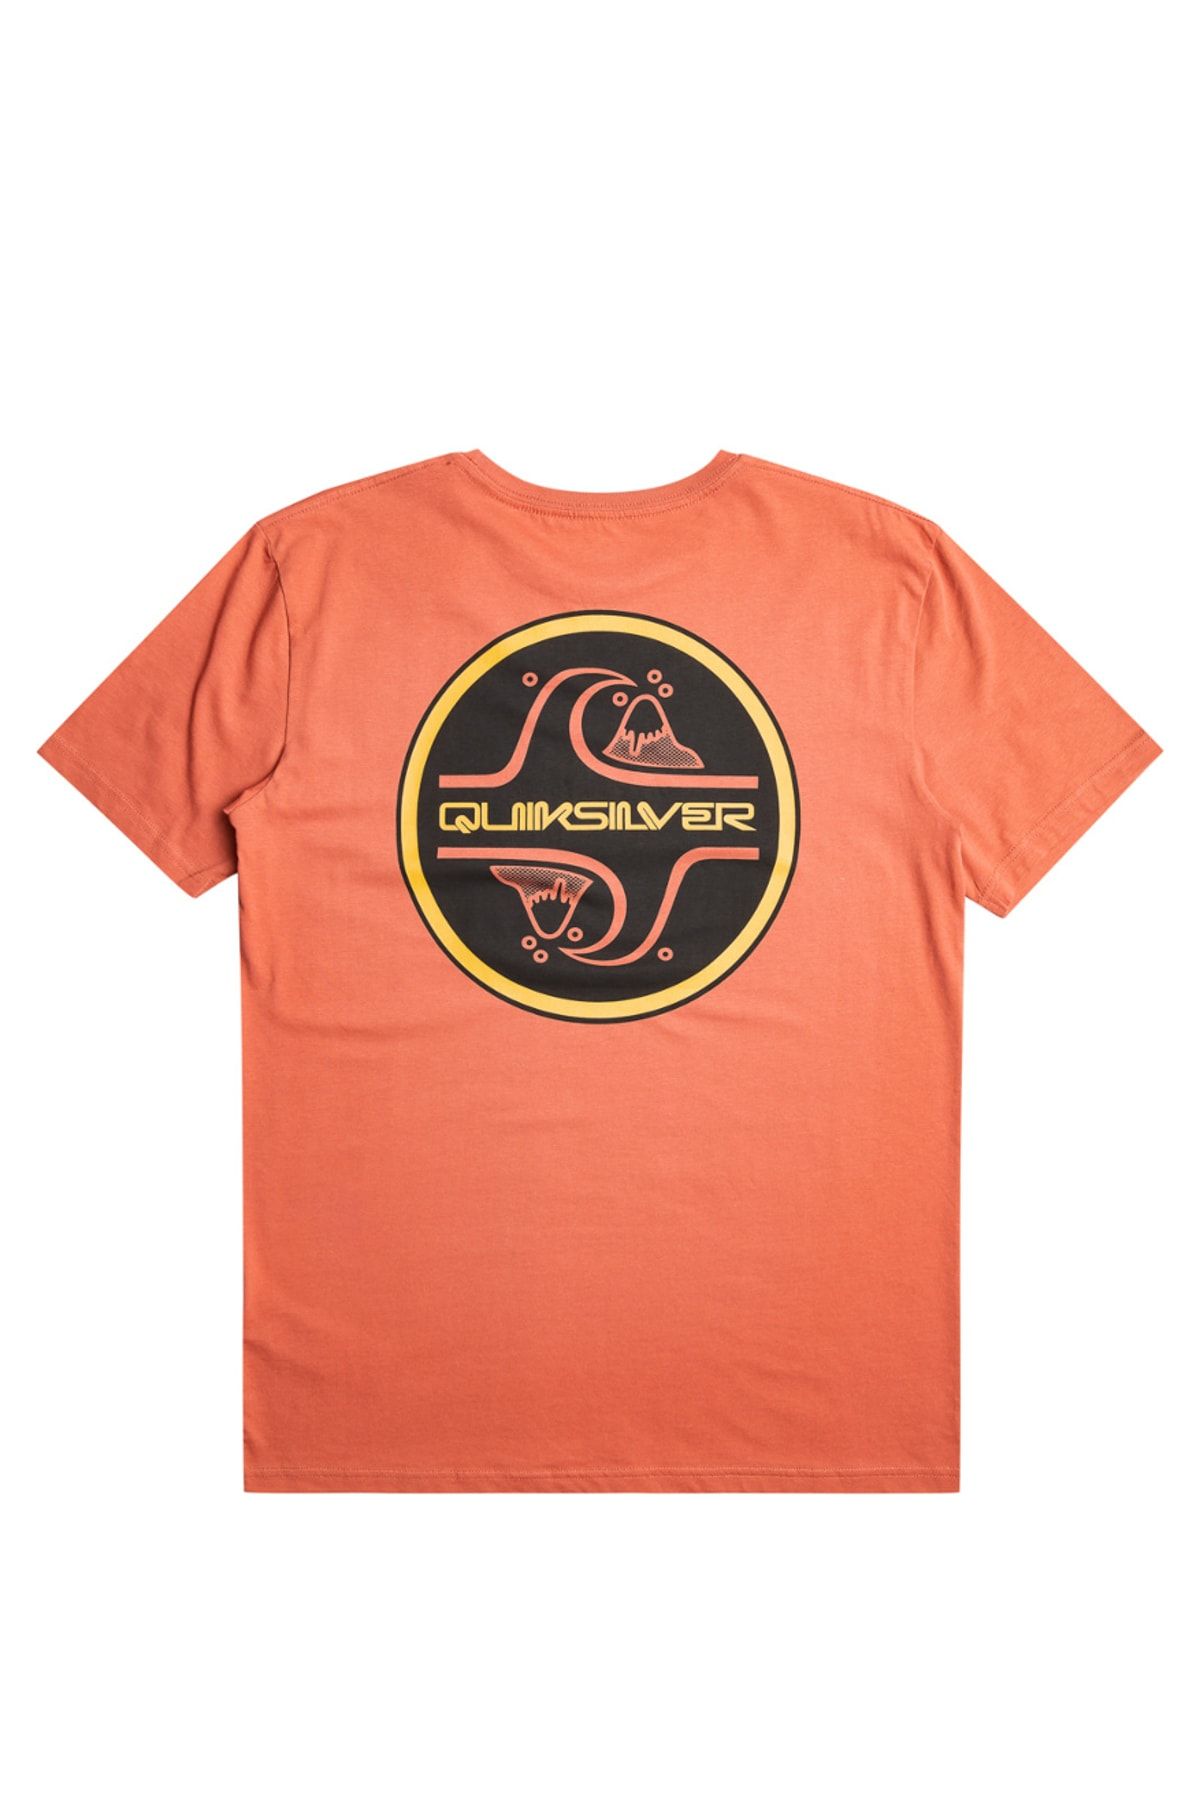 - Quiksilver Trendyol T-Shirt - - Orange Regular Fit